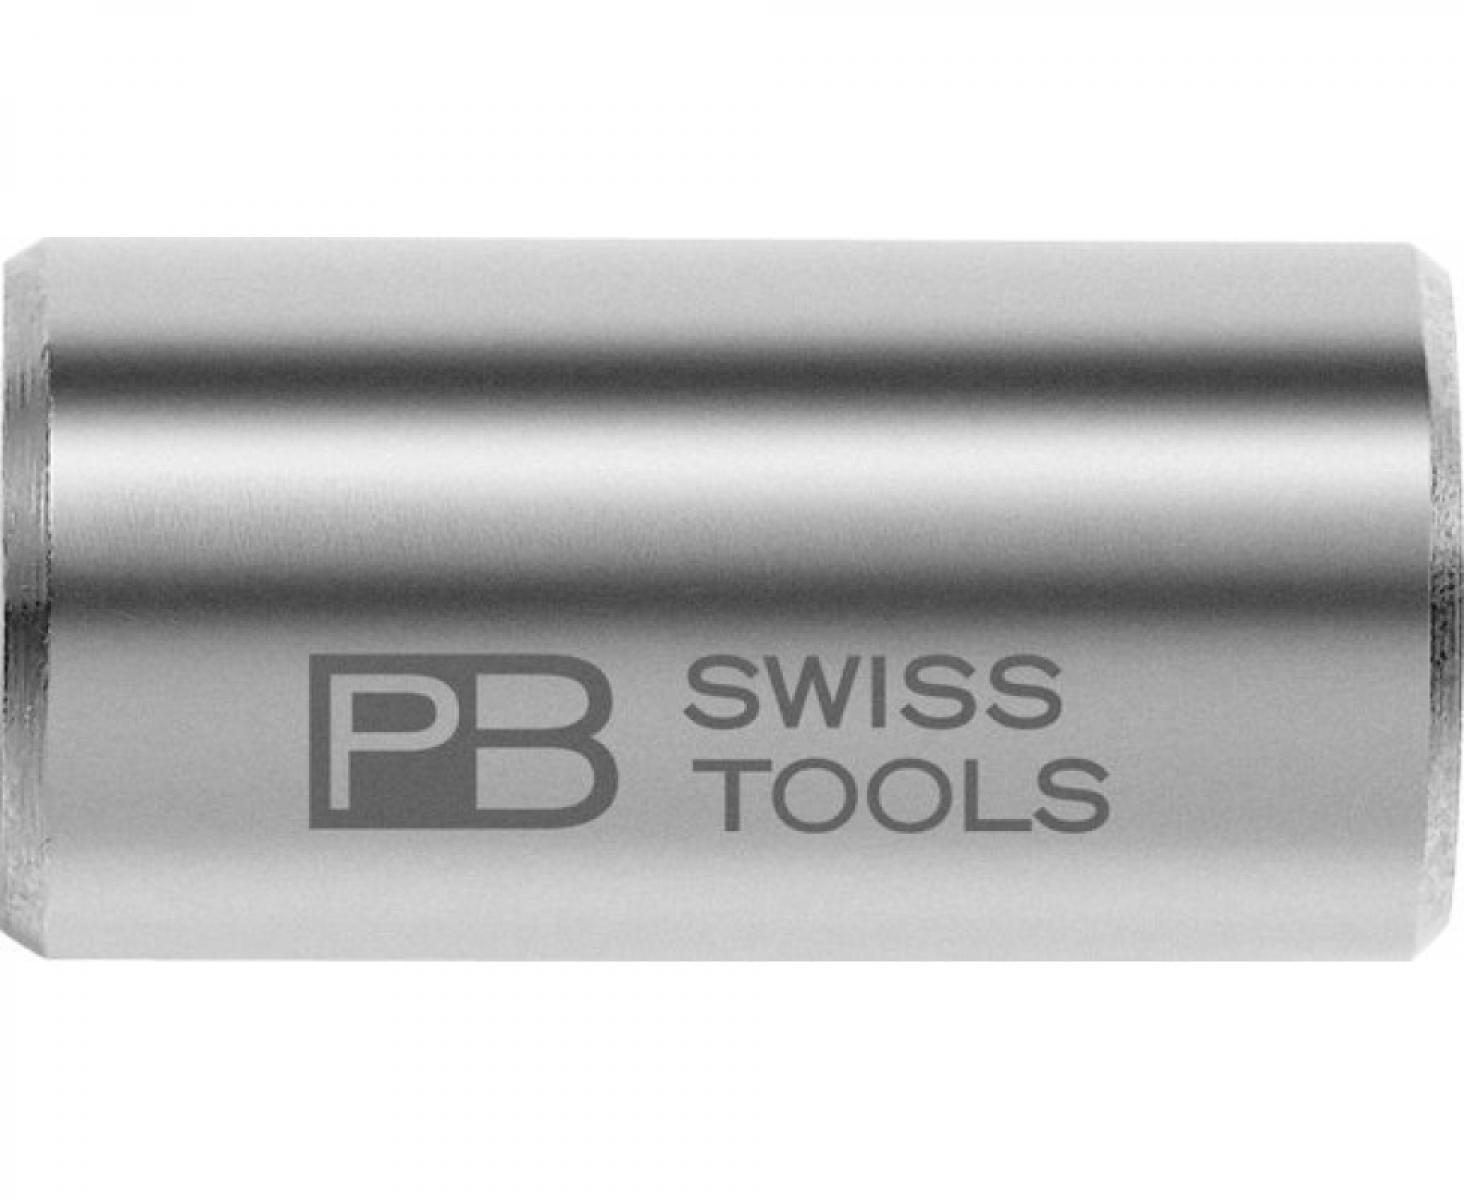 Переходник-адаптер для бит C6,3 5 мм / 1/4" с магнитом PB Swiss Tools PB 470.M